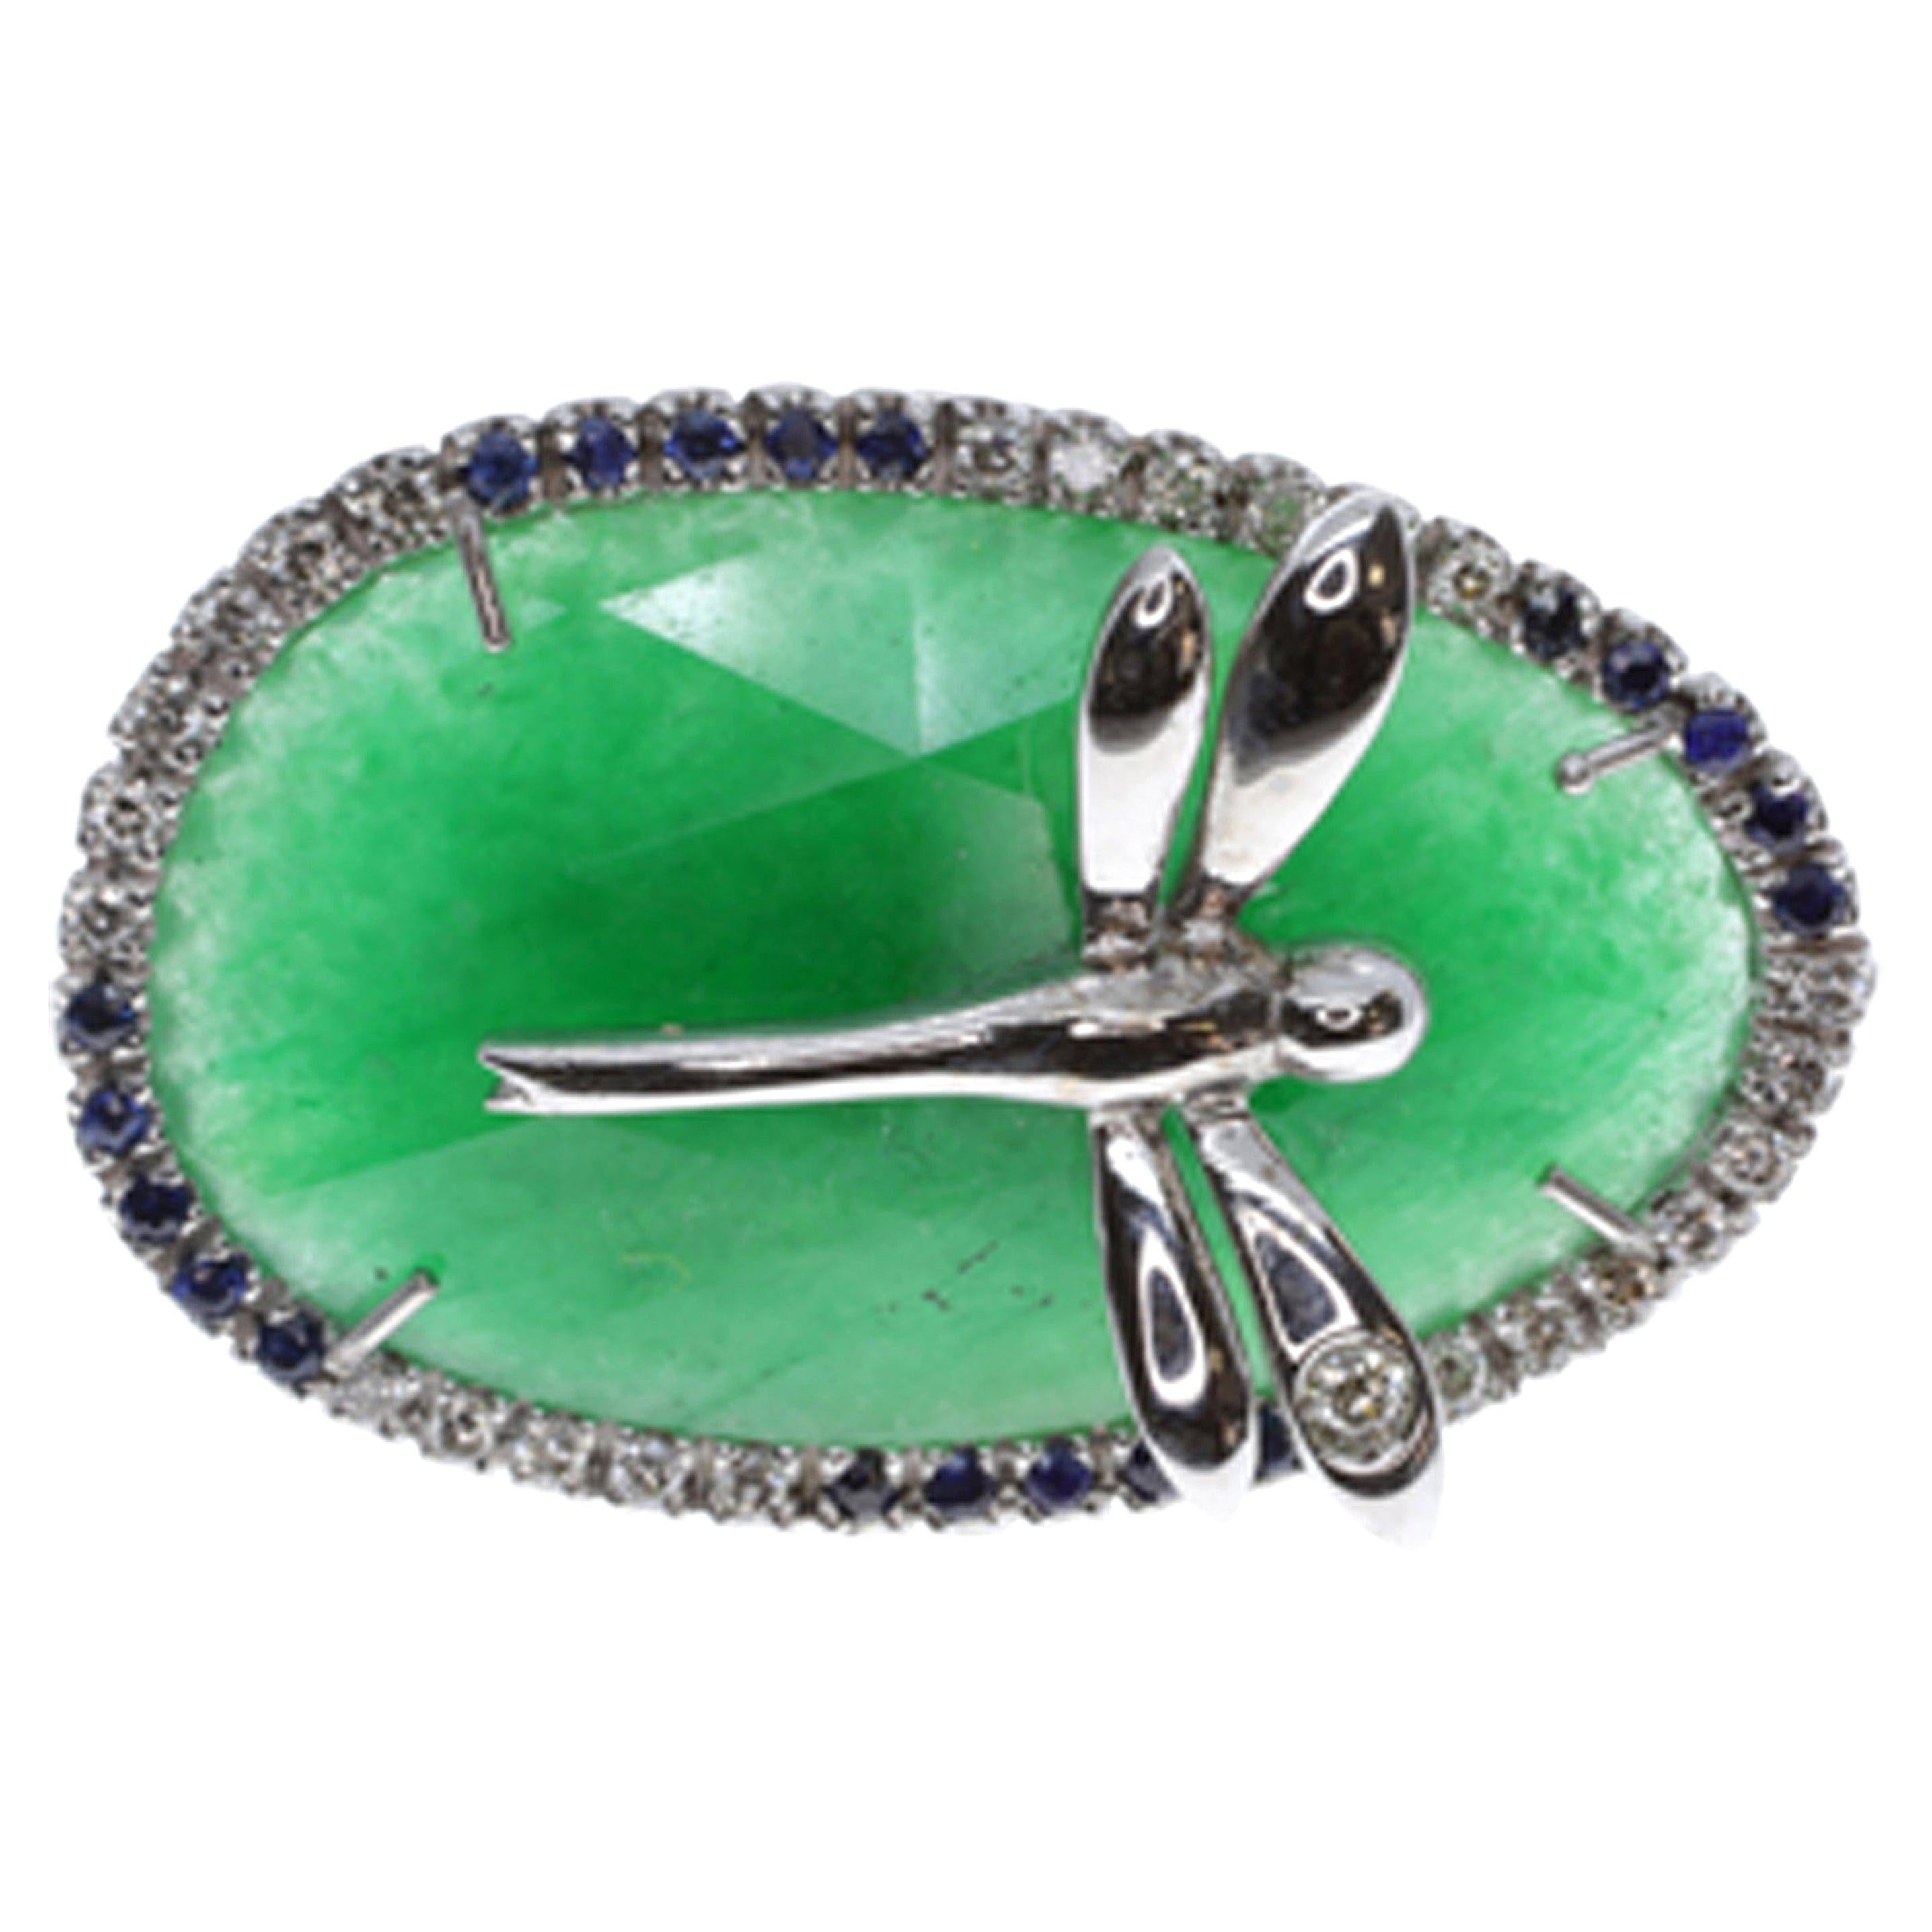 21st Century 18 Karat Gold Sapphire Diamond and Jade Cocktail Ring